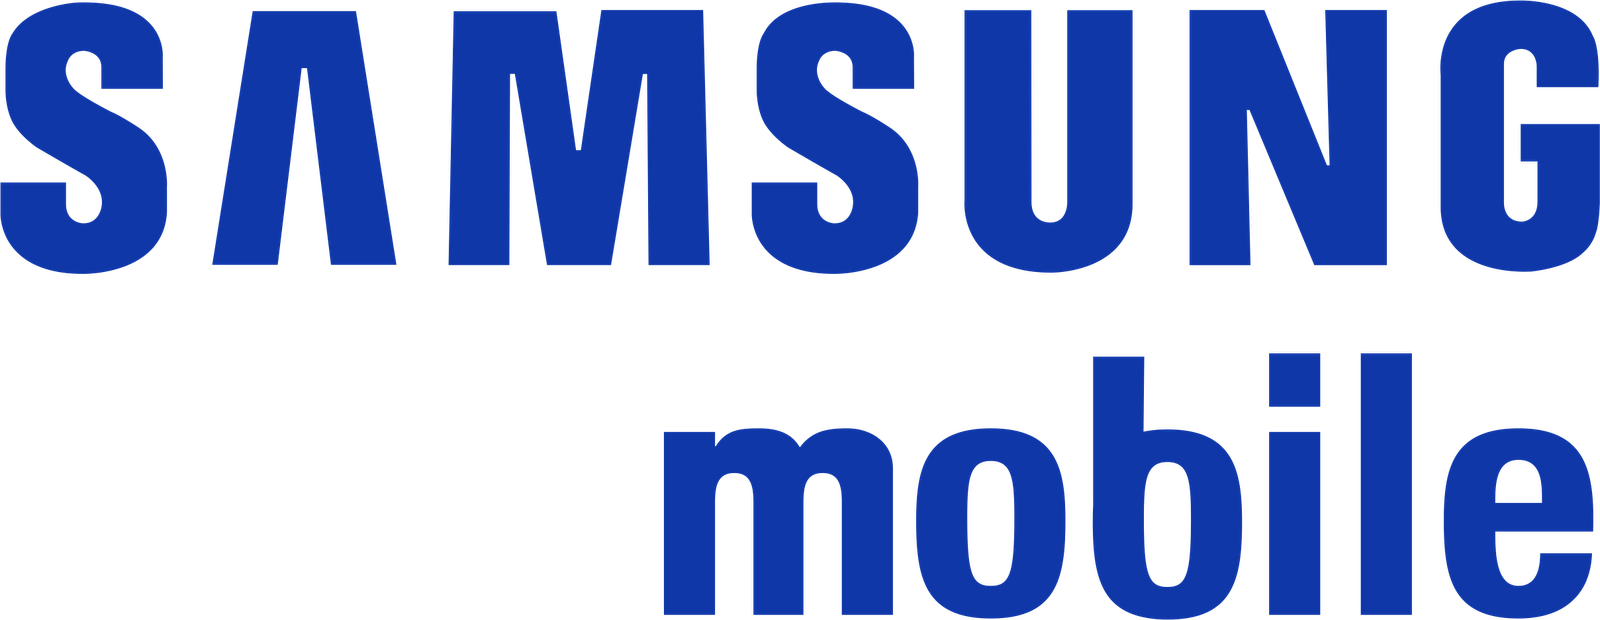 Download PNG image - Samsung Logo PNG Free Download 